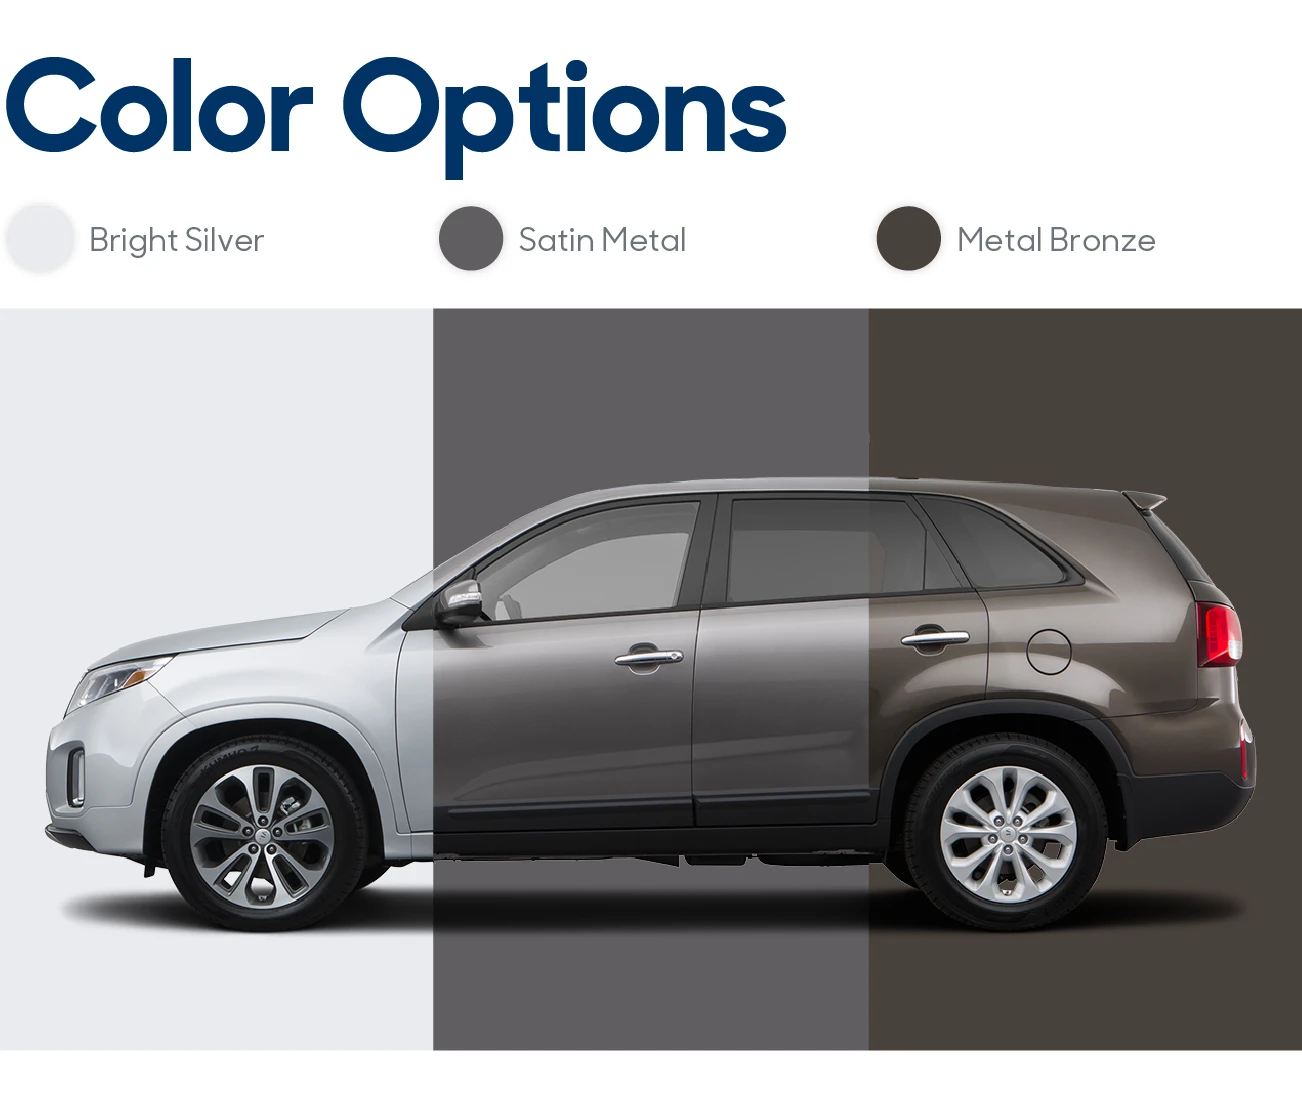 2015 Kia Sorento: Reviews, Photos, and More: Color Options | CarMax